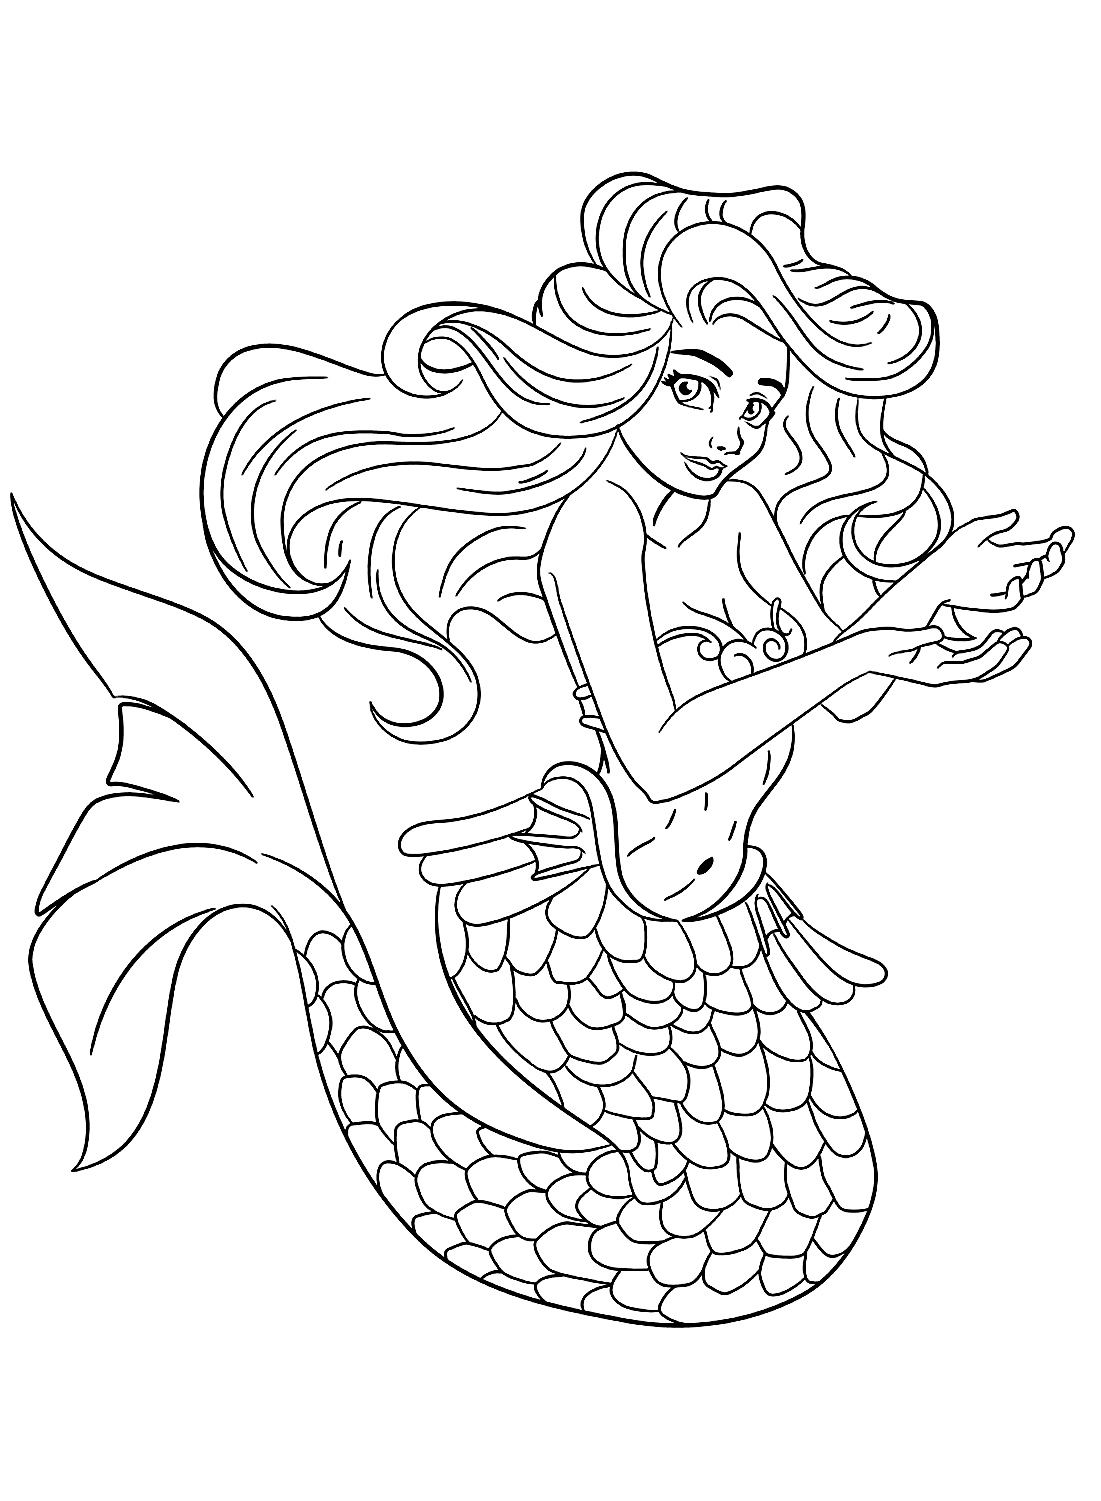 Belle feuille de coloriage de sirène de Mermaid